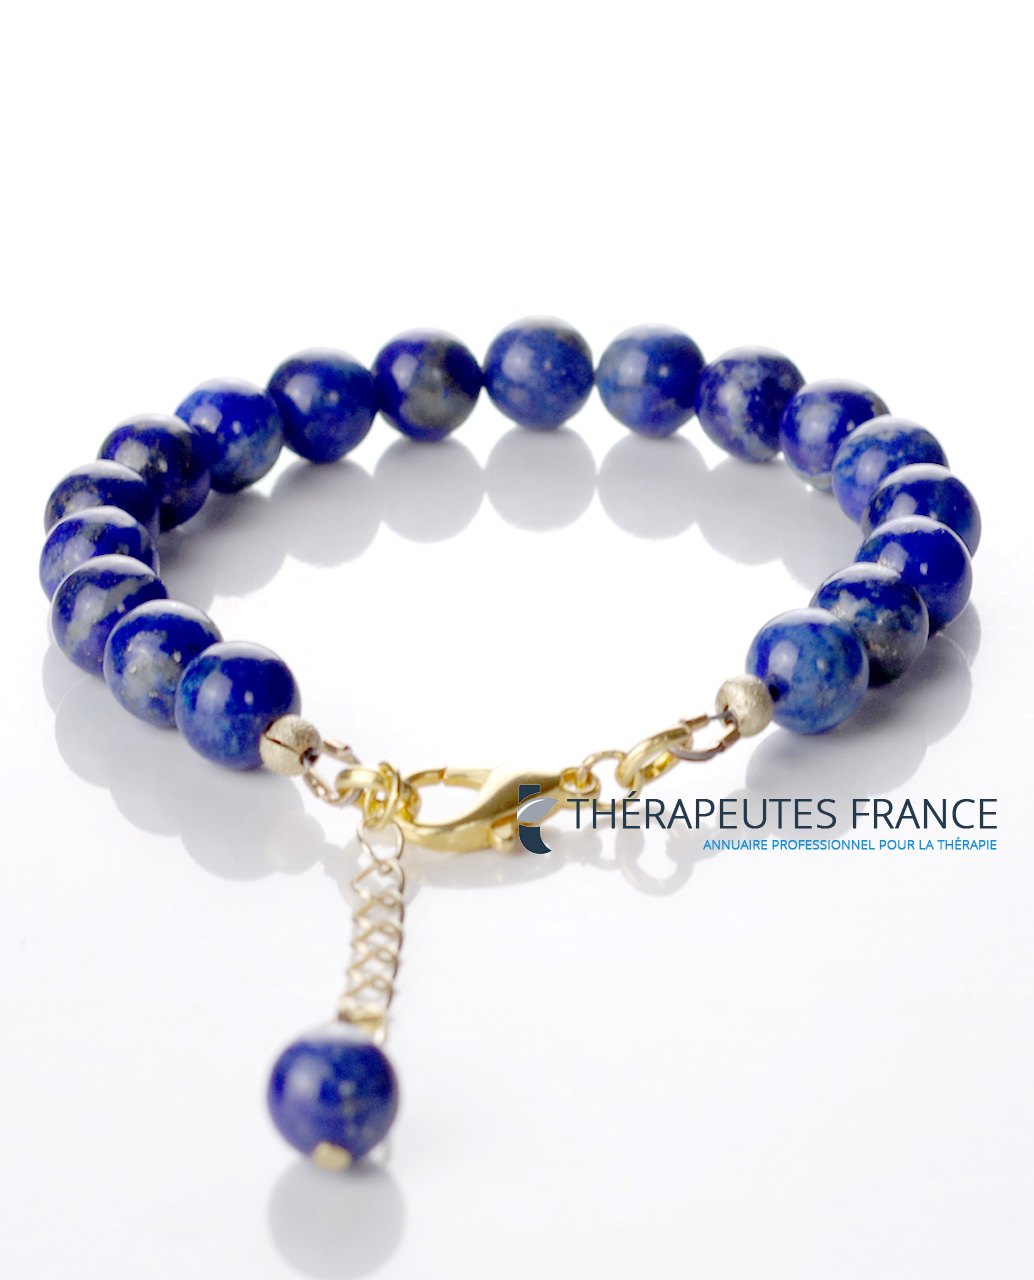 Amethyst  Blood Stone  Labradorite  Lapis Lazuli  Sodalite Bracelet   Buy Online Migraine and Headache Bracelet  8mm  Shubhanjali